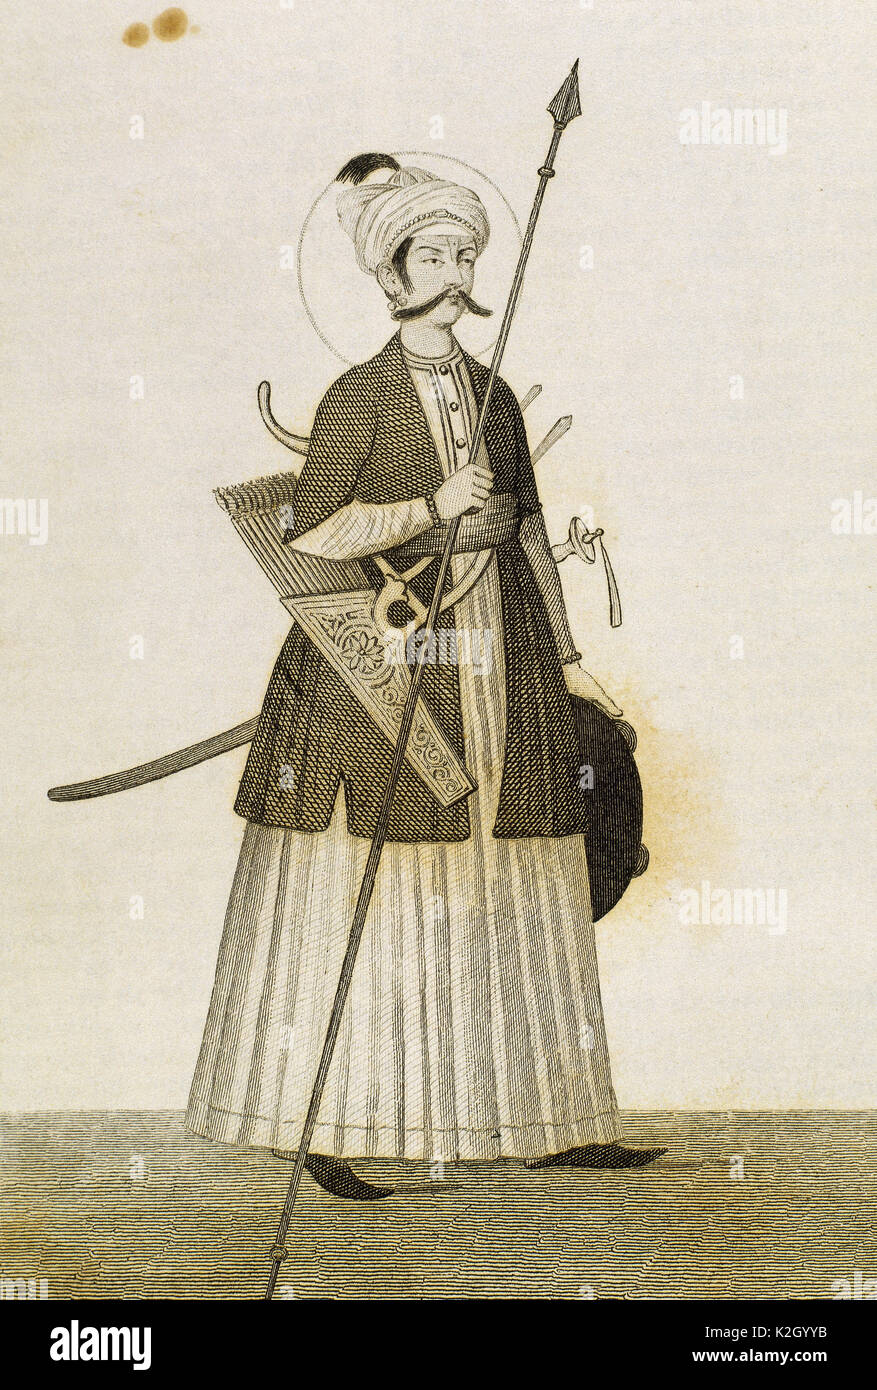 Bekermadjit, rajá de Oudjein. Reinó tres años. Lemaitre direxit. Retrato. Grabado. Anónimo. 'Panorama Universal, India, 1845". Foto de stock